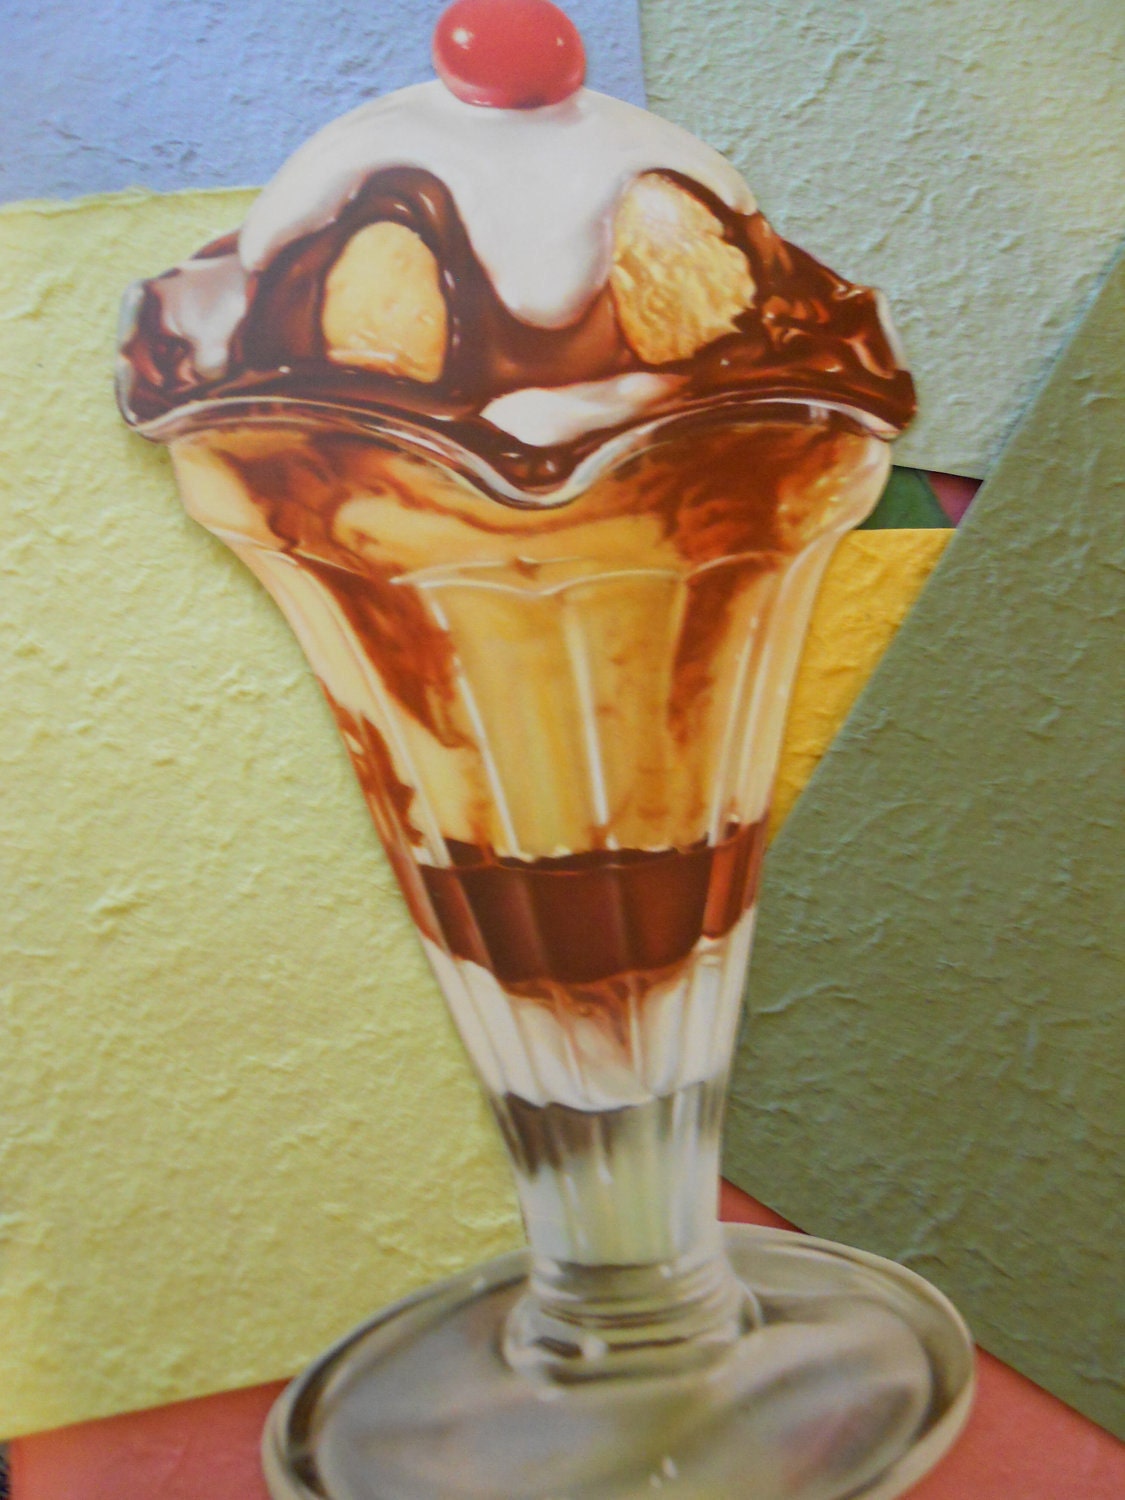 huge ice cream